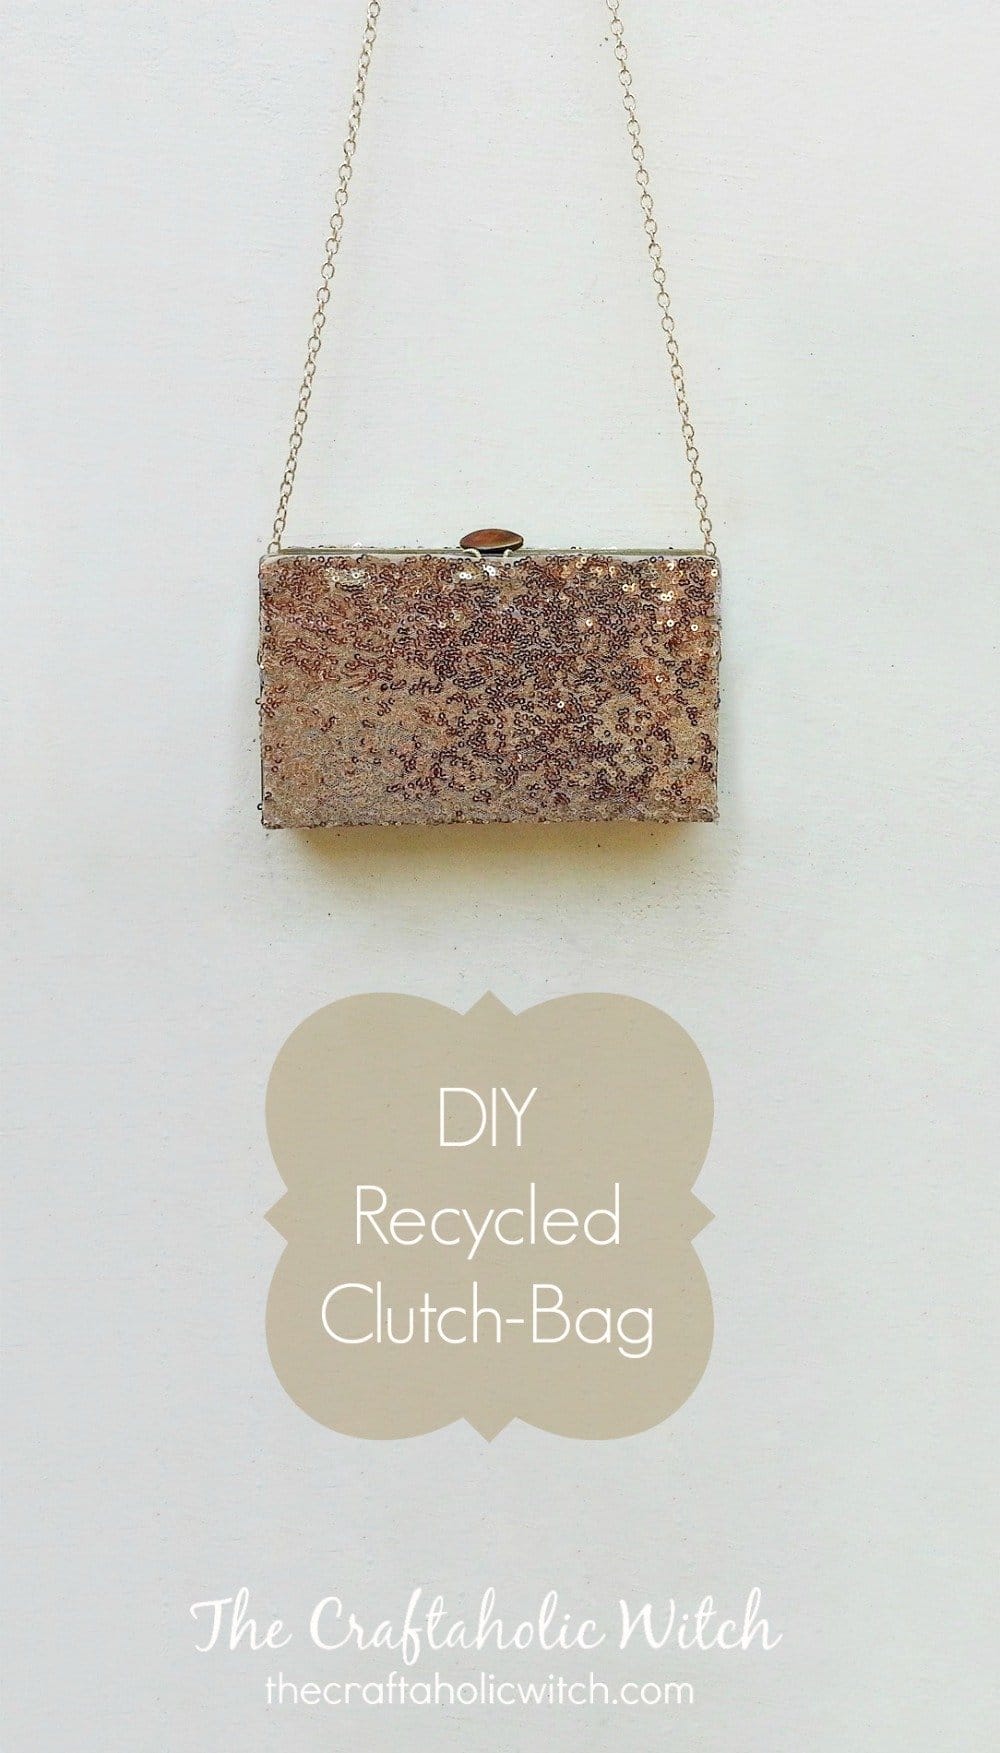 DIY Recycled Clutch-Bag